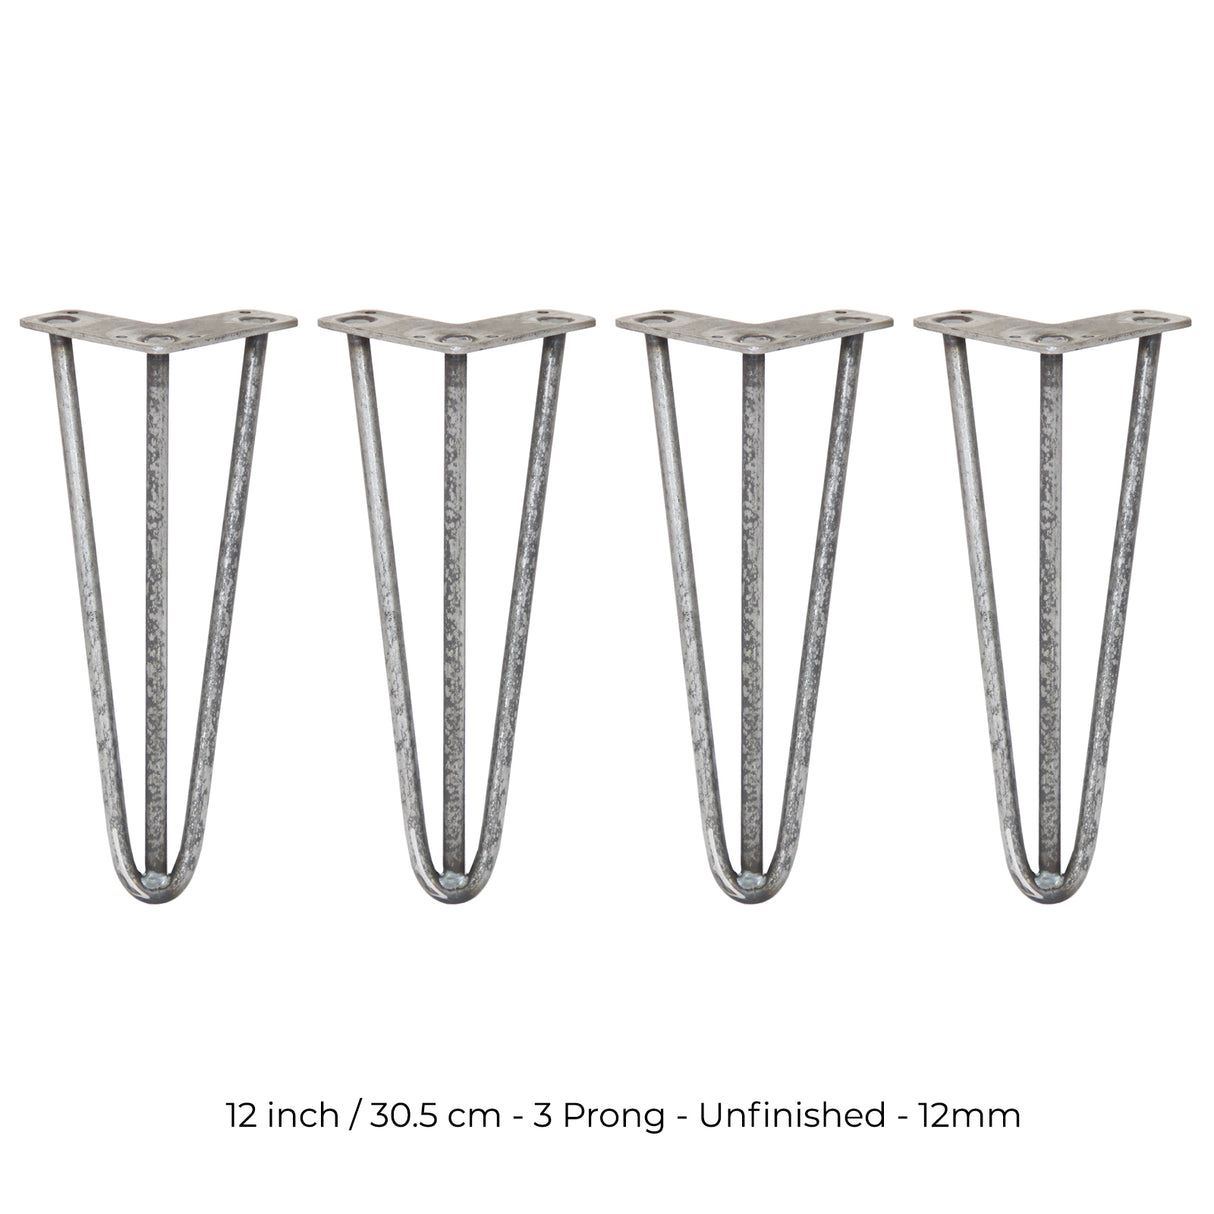 4 x 12" Hairpin Legs - 3 Prong - 12mm - Raw Steel